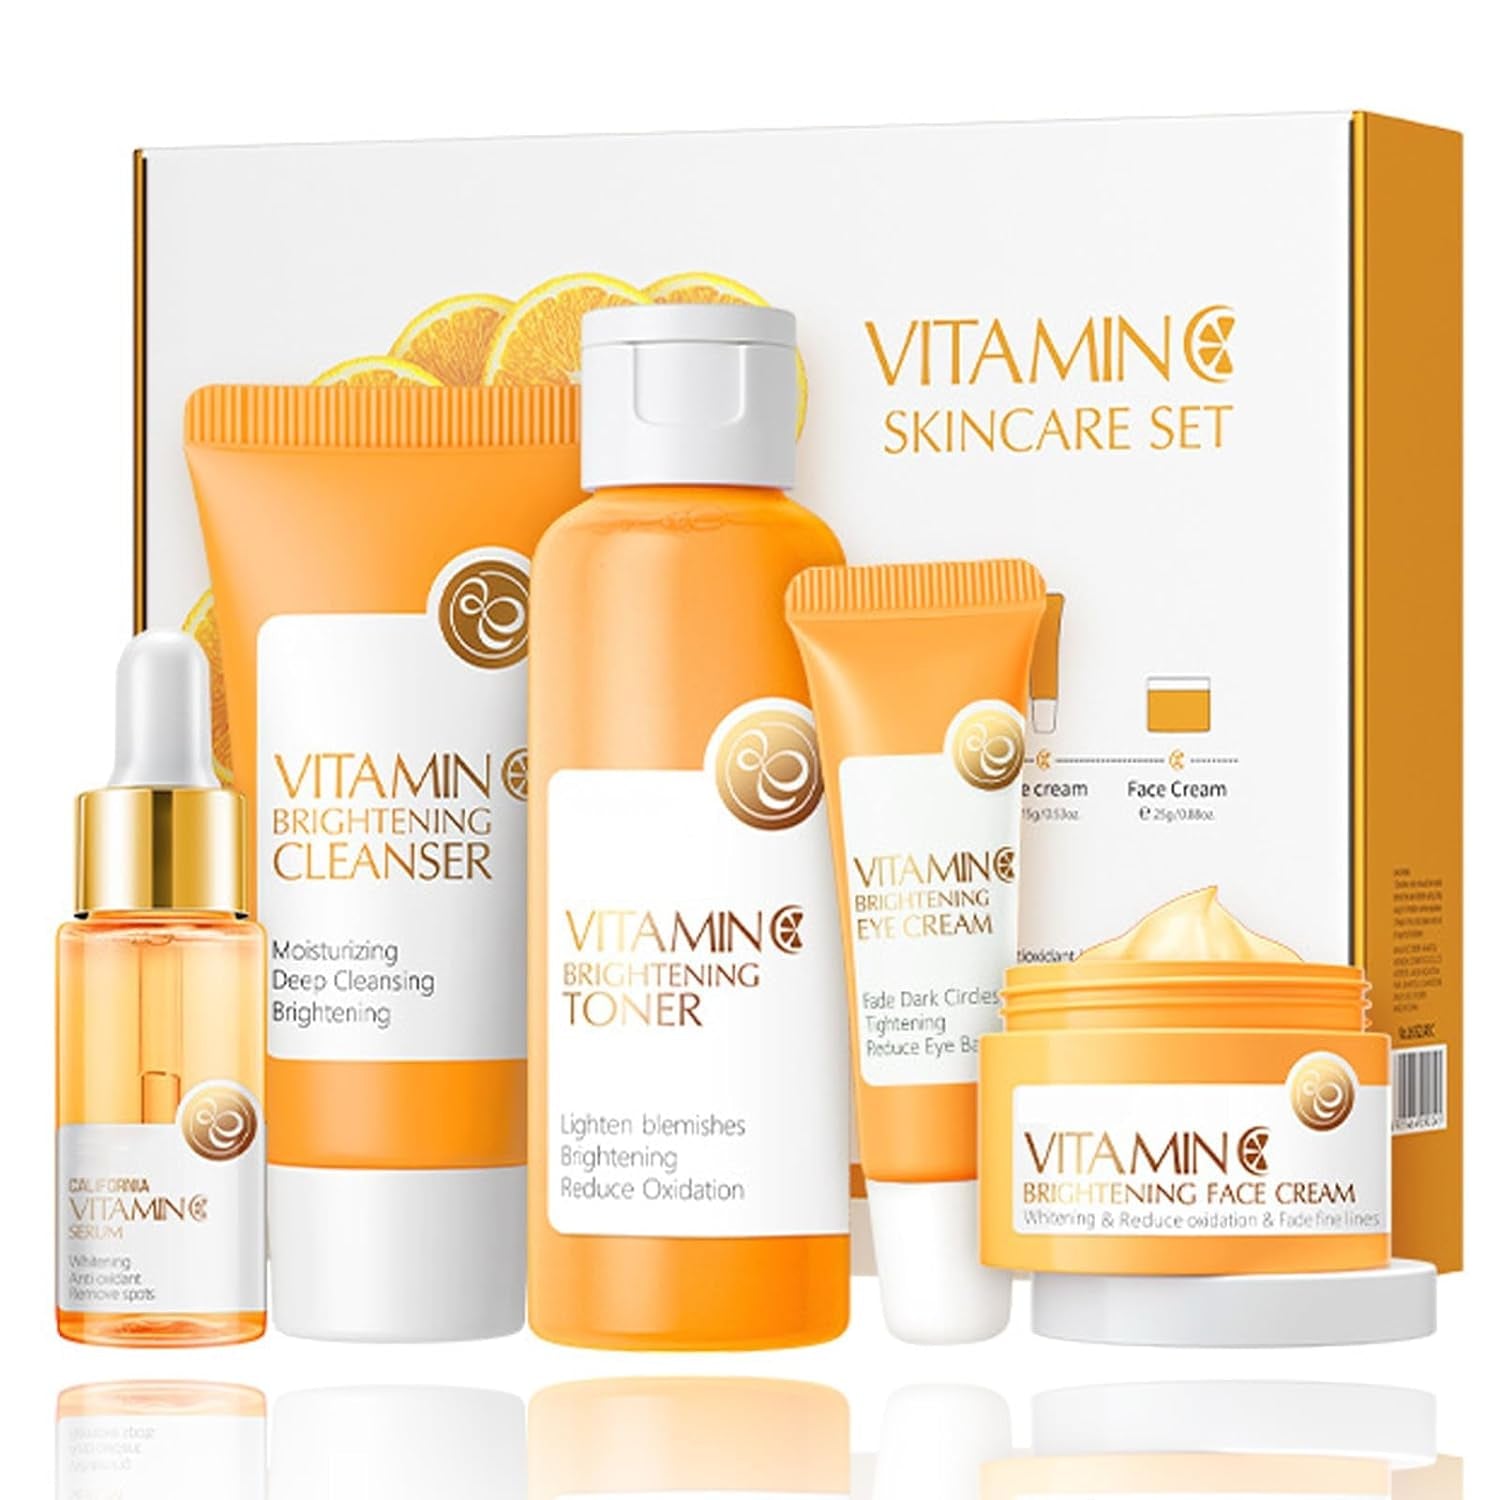 Vitamin C Skincare Set, 5-In-1 Skincare Gift Set with Cleanser, Toner, Face Serum, Face Cream, and Eye Cream, Skin Care Products for Teen Girls, Long-Lasting Moisturizing Skincare Set for Women Men